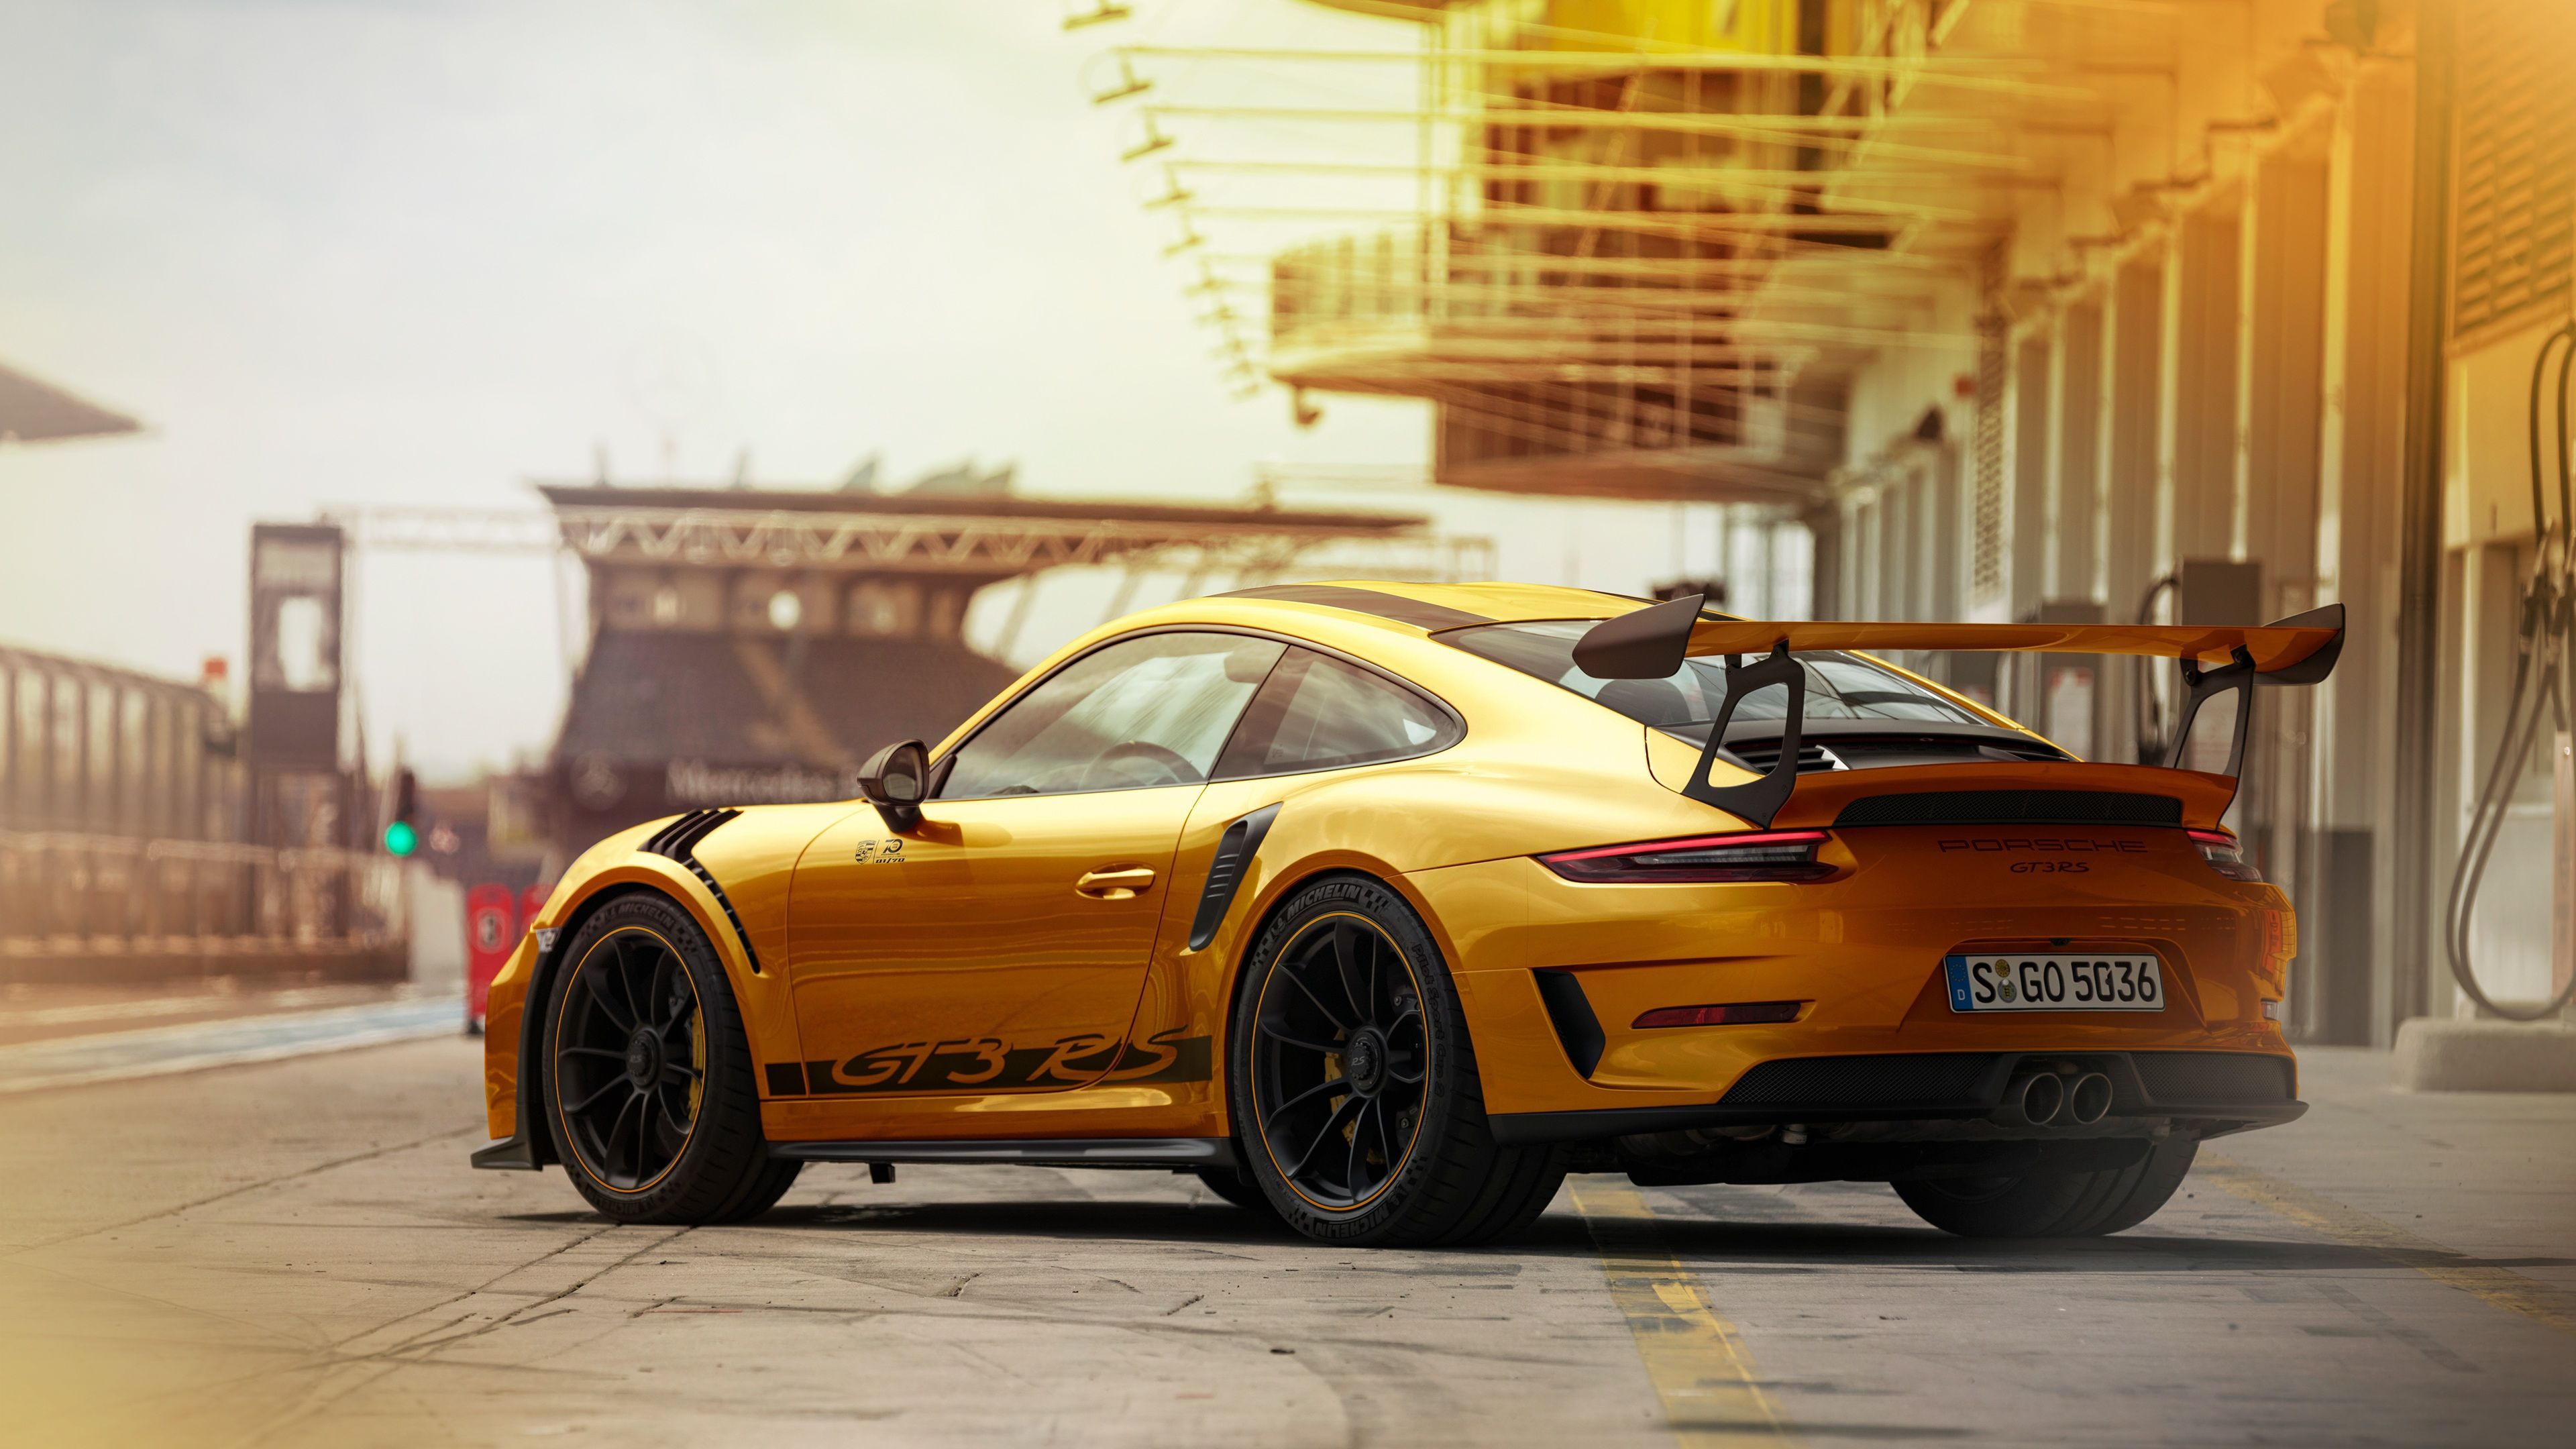  Porsche Gt3 Rs Hintergrundbild 3840x2160. Porsche 991 GT3 RS. Coole autos, Pc hintergrundbilder, Autos